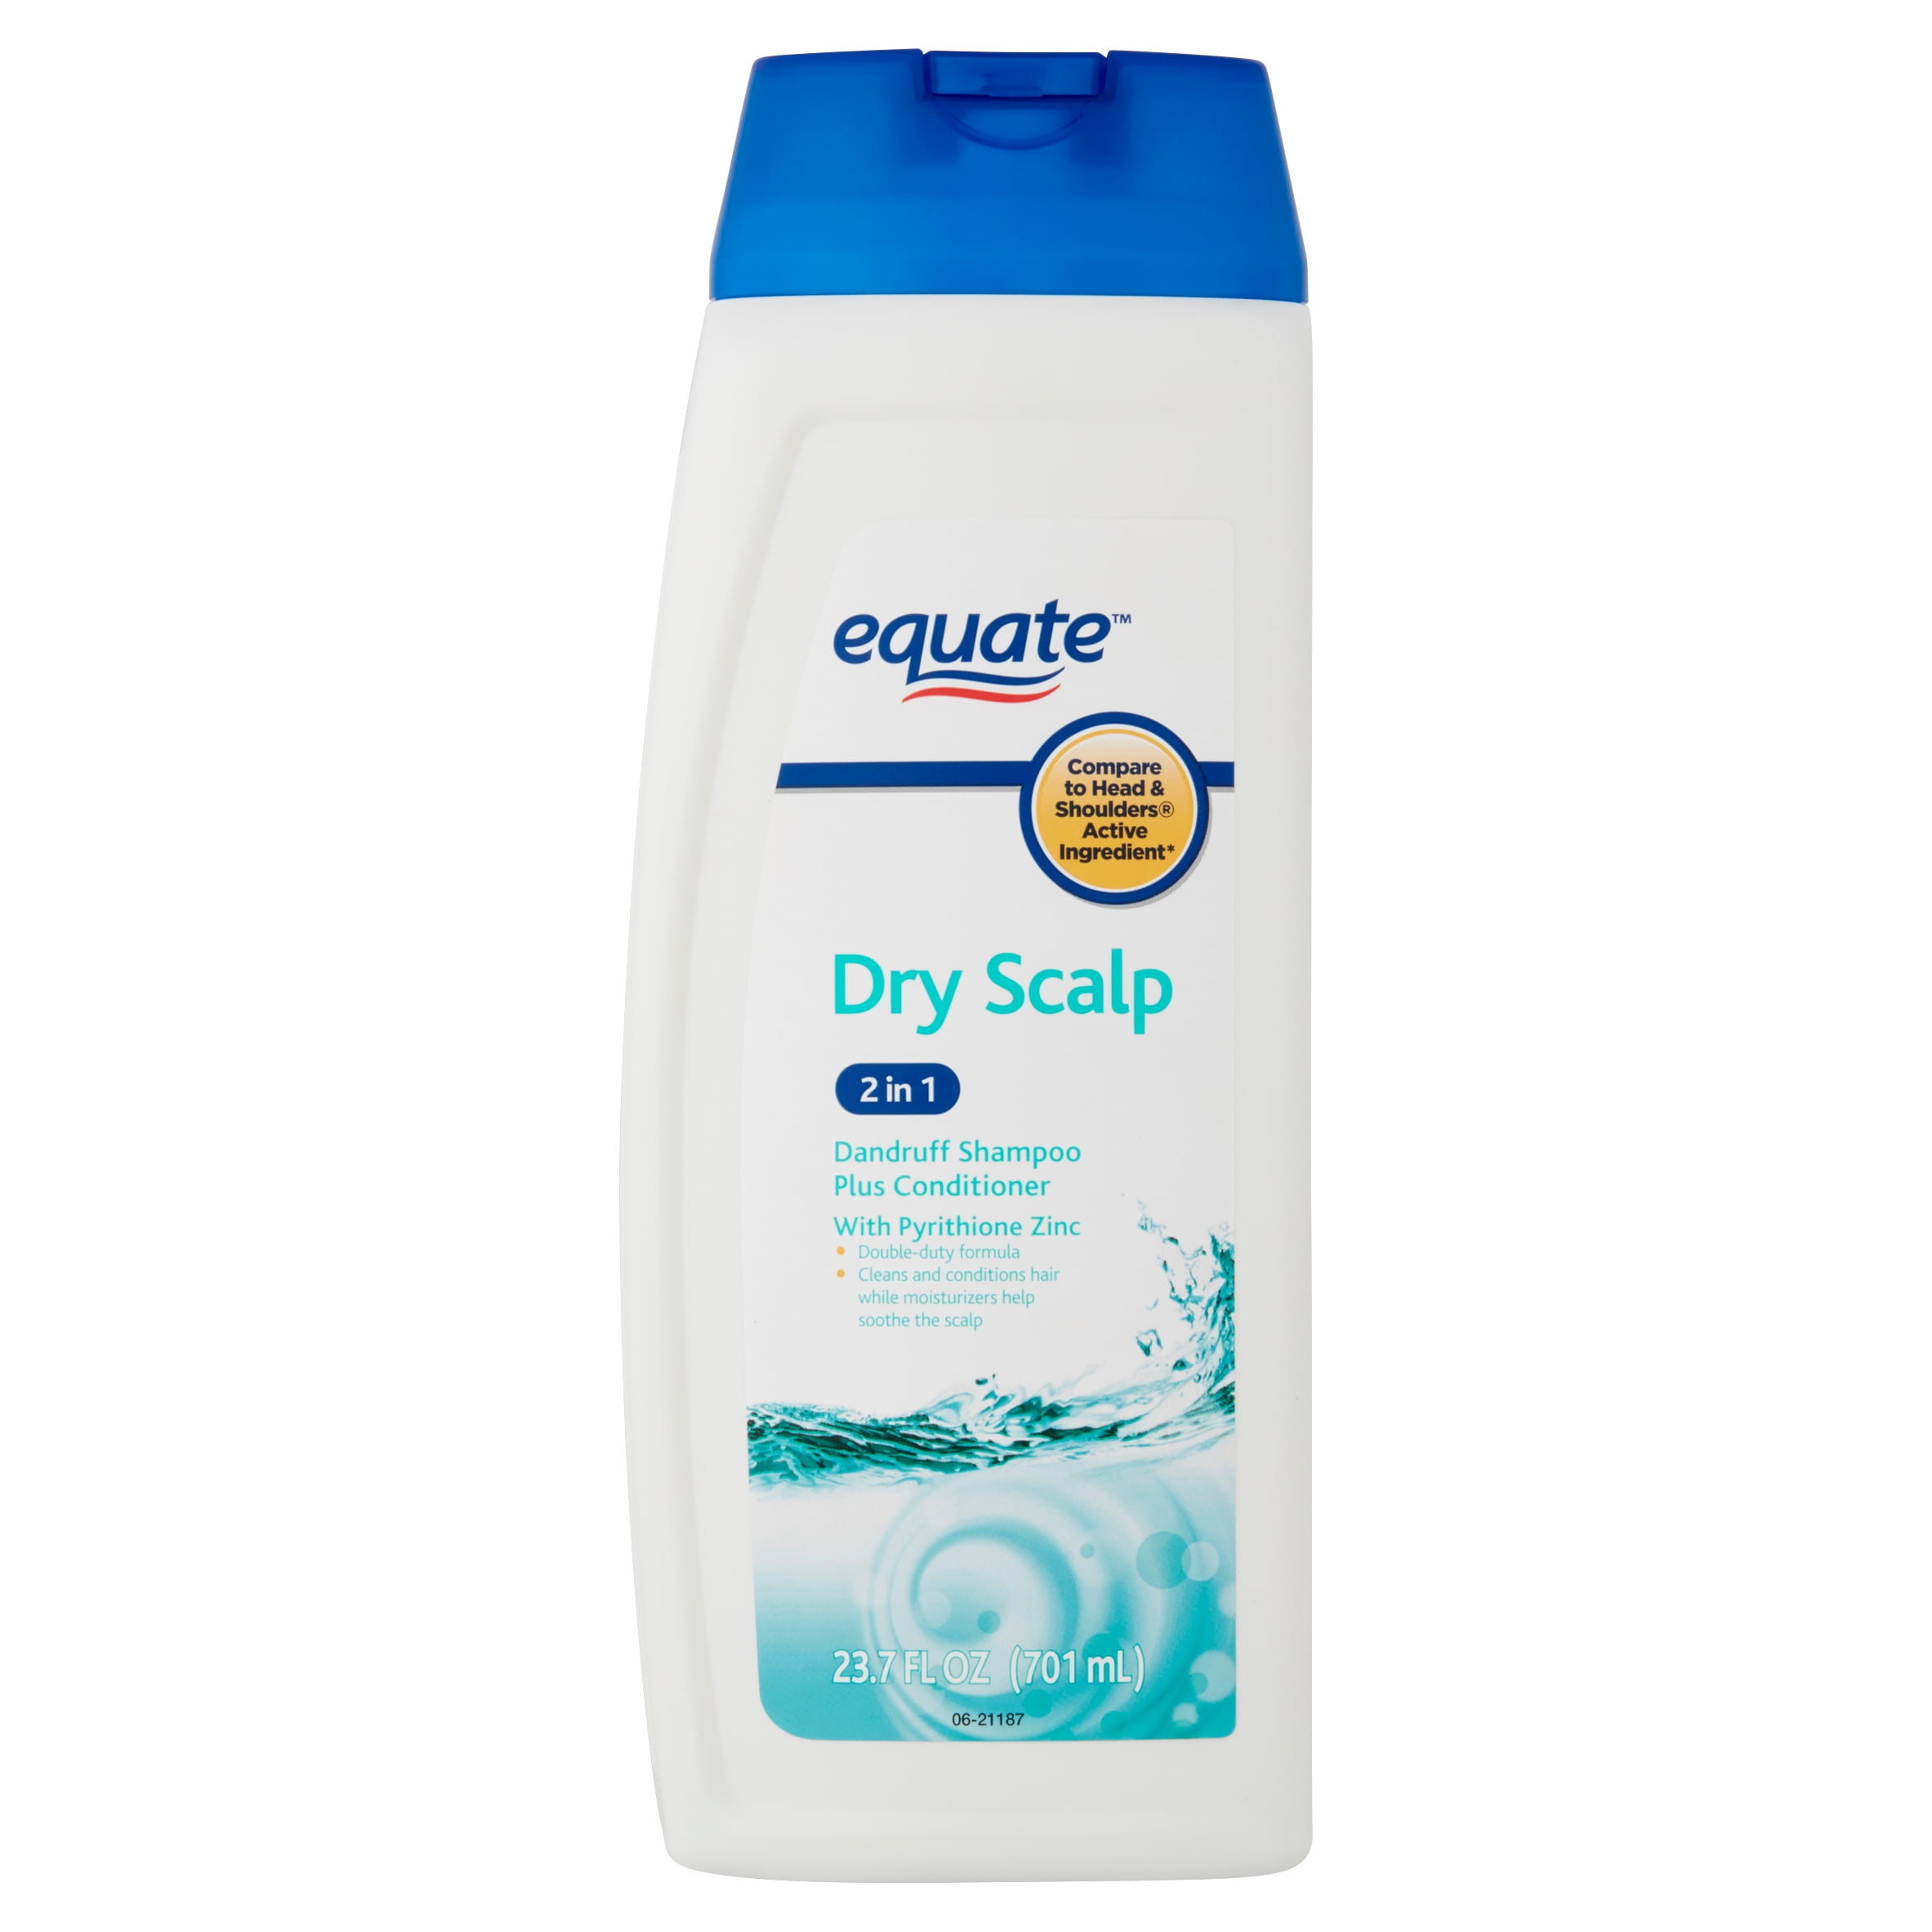 Equate 2 In 1 Dry Scalp Dandruff Shampoo Conditioner 23 7 Fl Oz Walmart Com